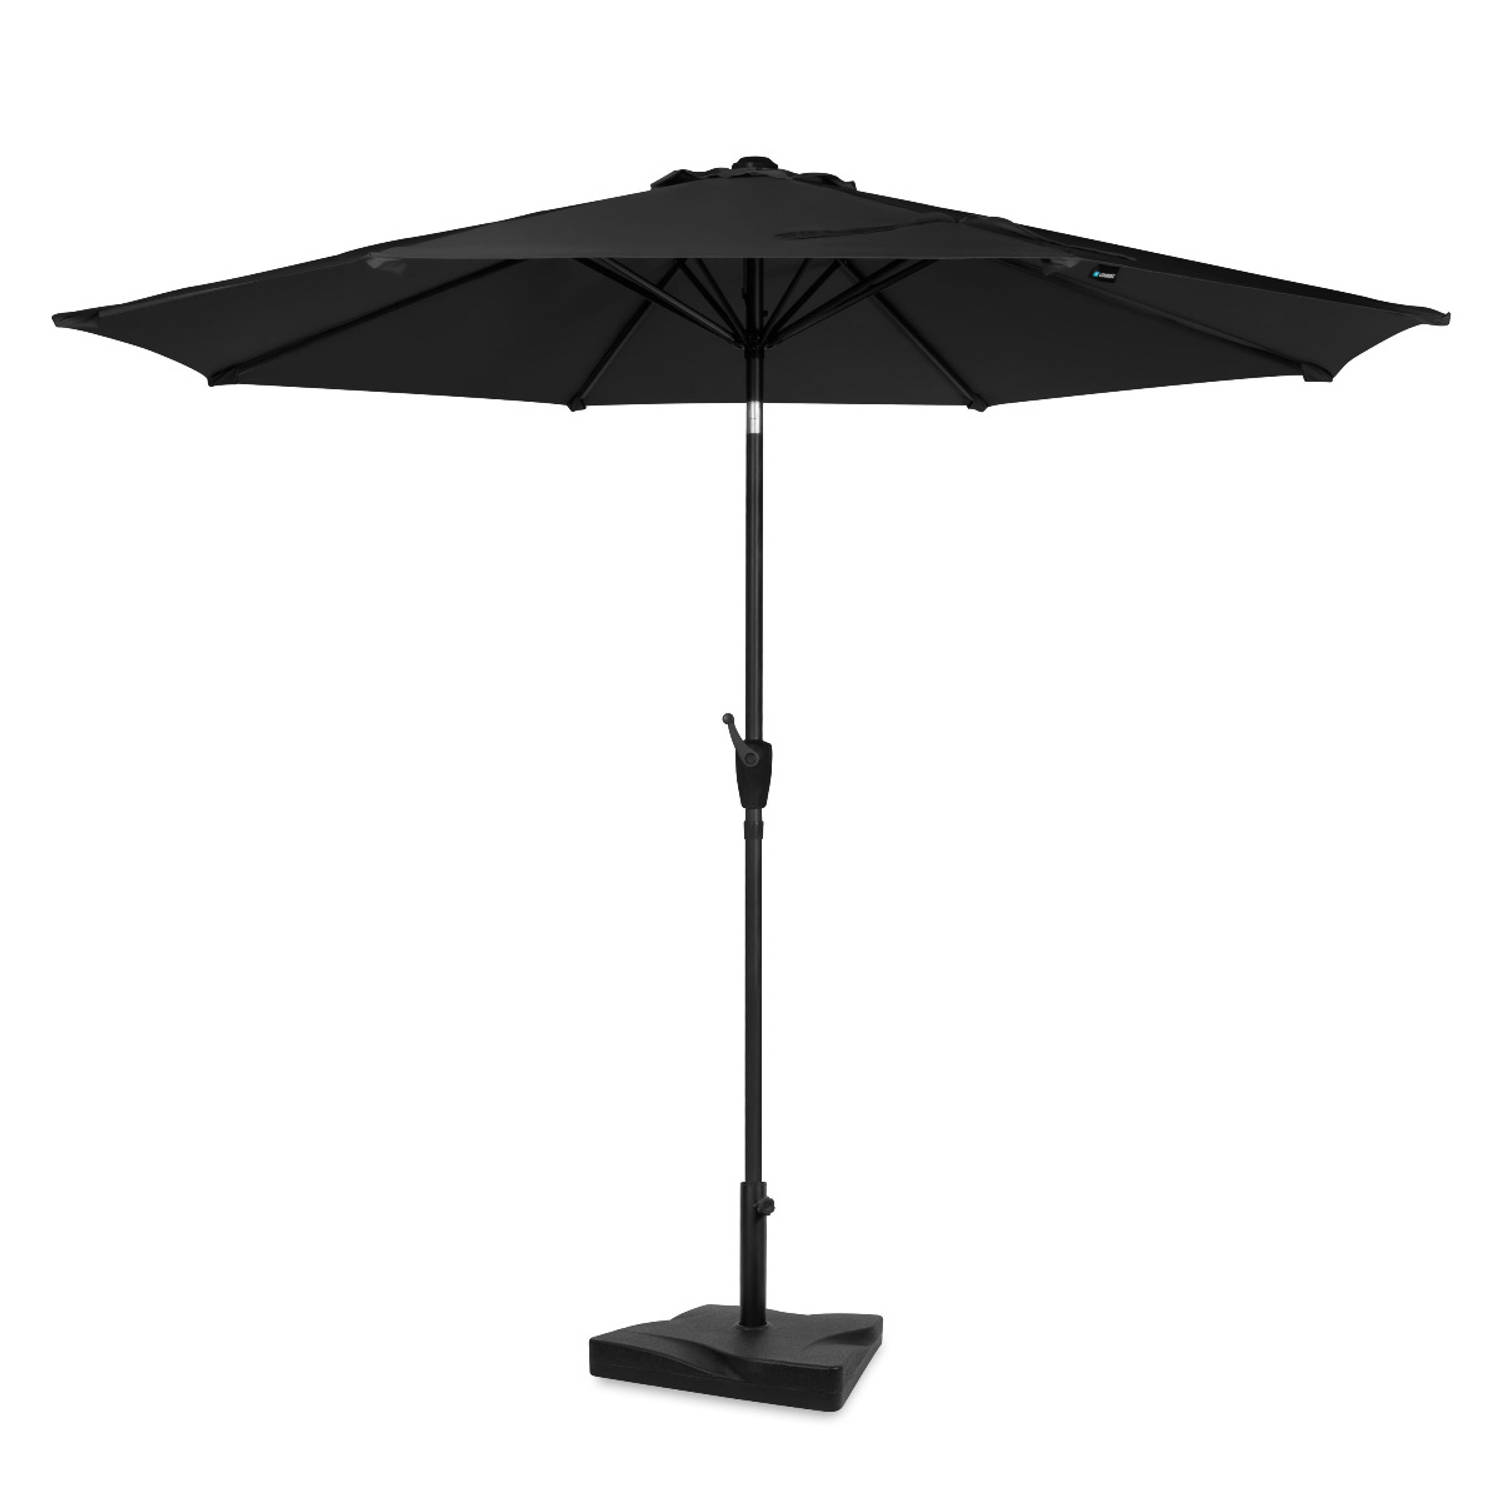 VONROC Parasol Recanati Ø300cm Premium stokparasol antraciet-zwart Incl. parasolvoet